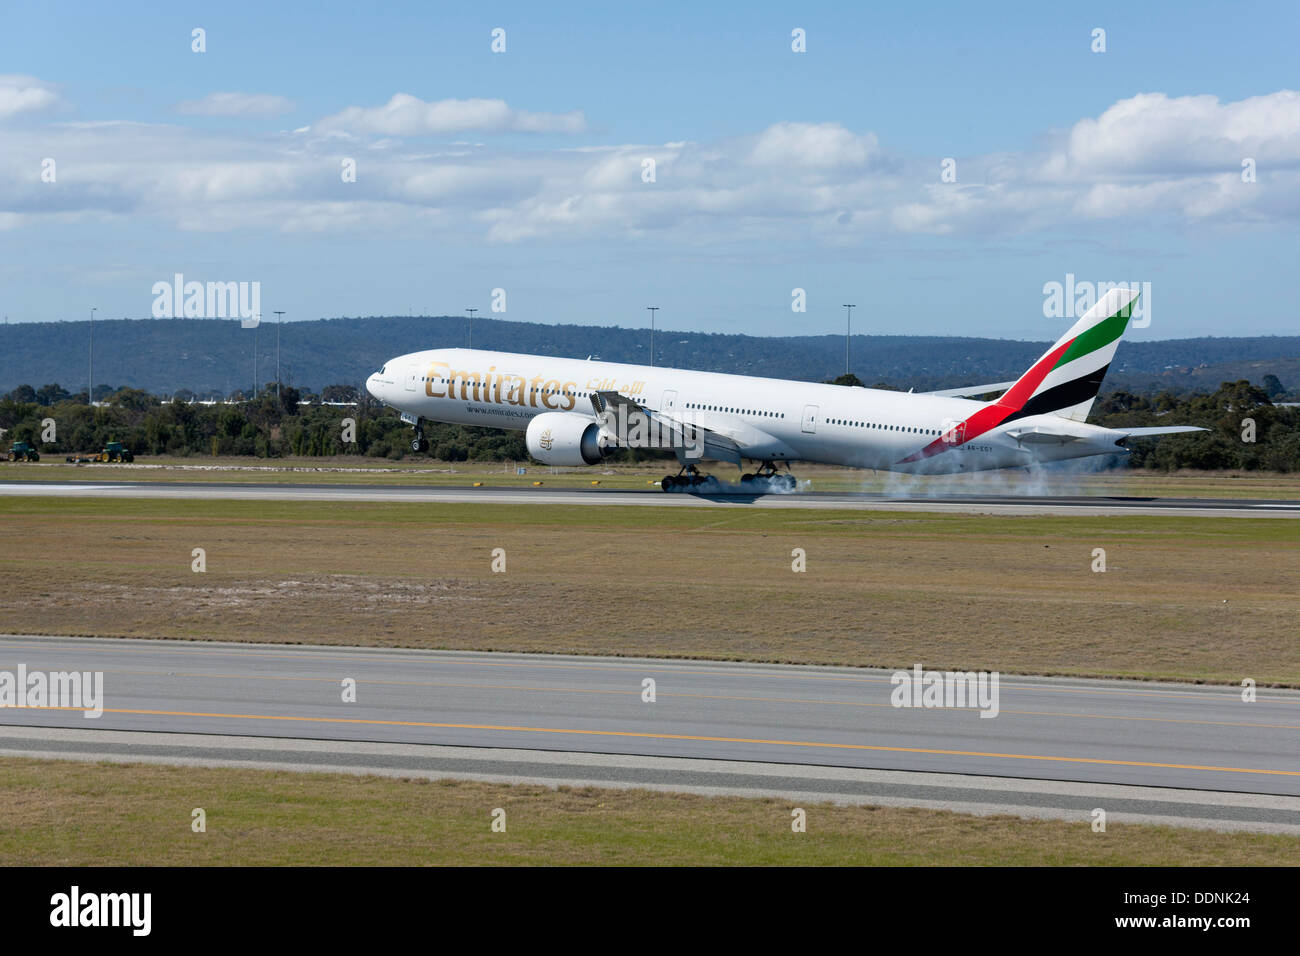 Emirates Boeing 777-300 aircraft landing at Perth Airport, Western Australia Stock Photo